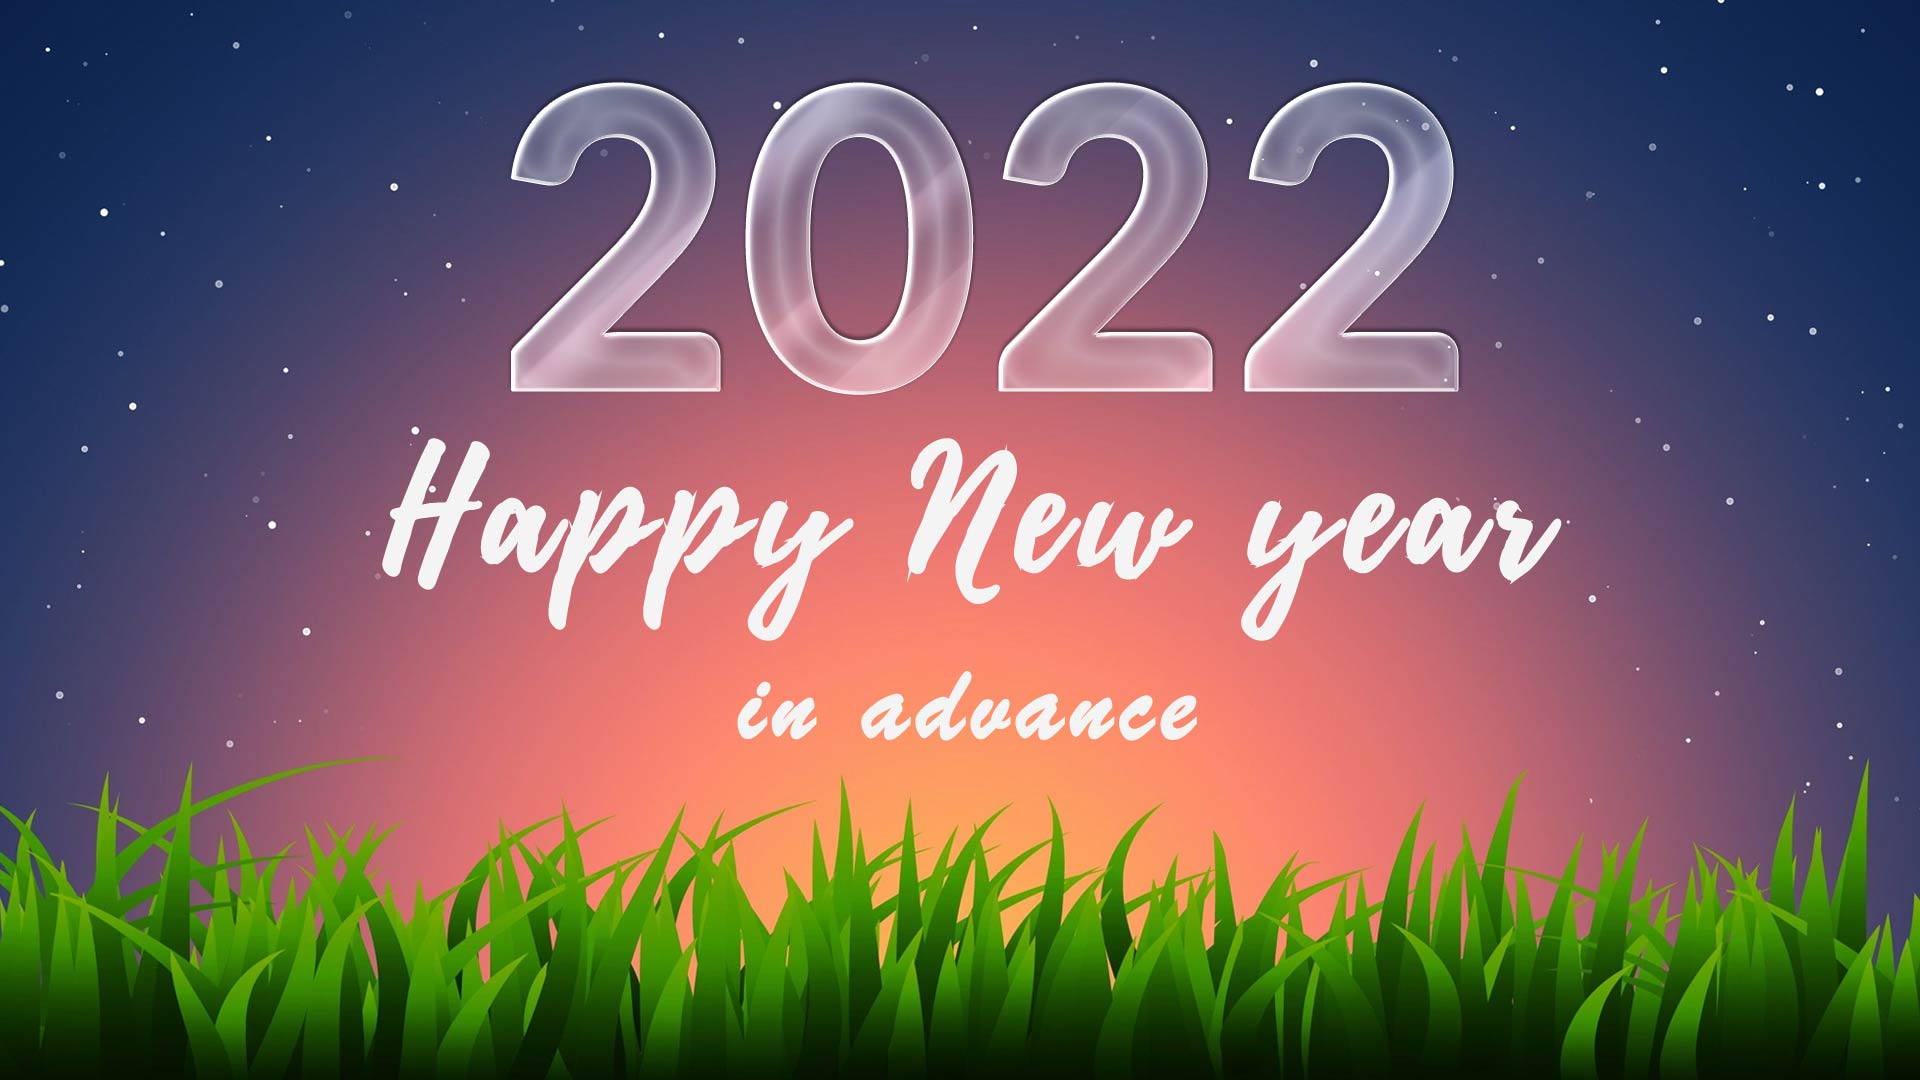 Advance Happy New Year 2022 Wallpaper